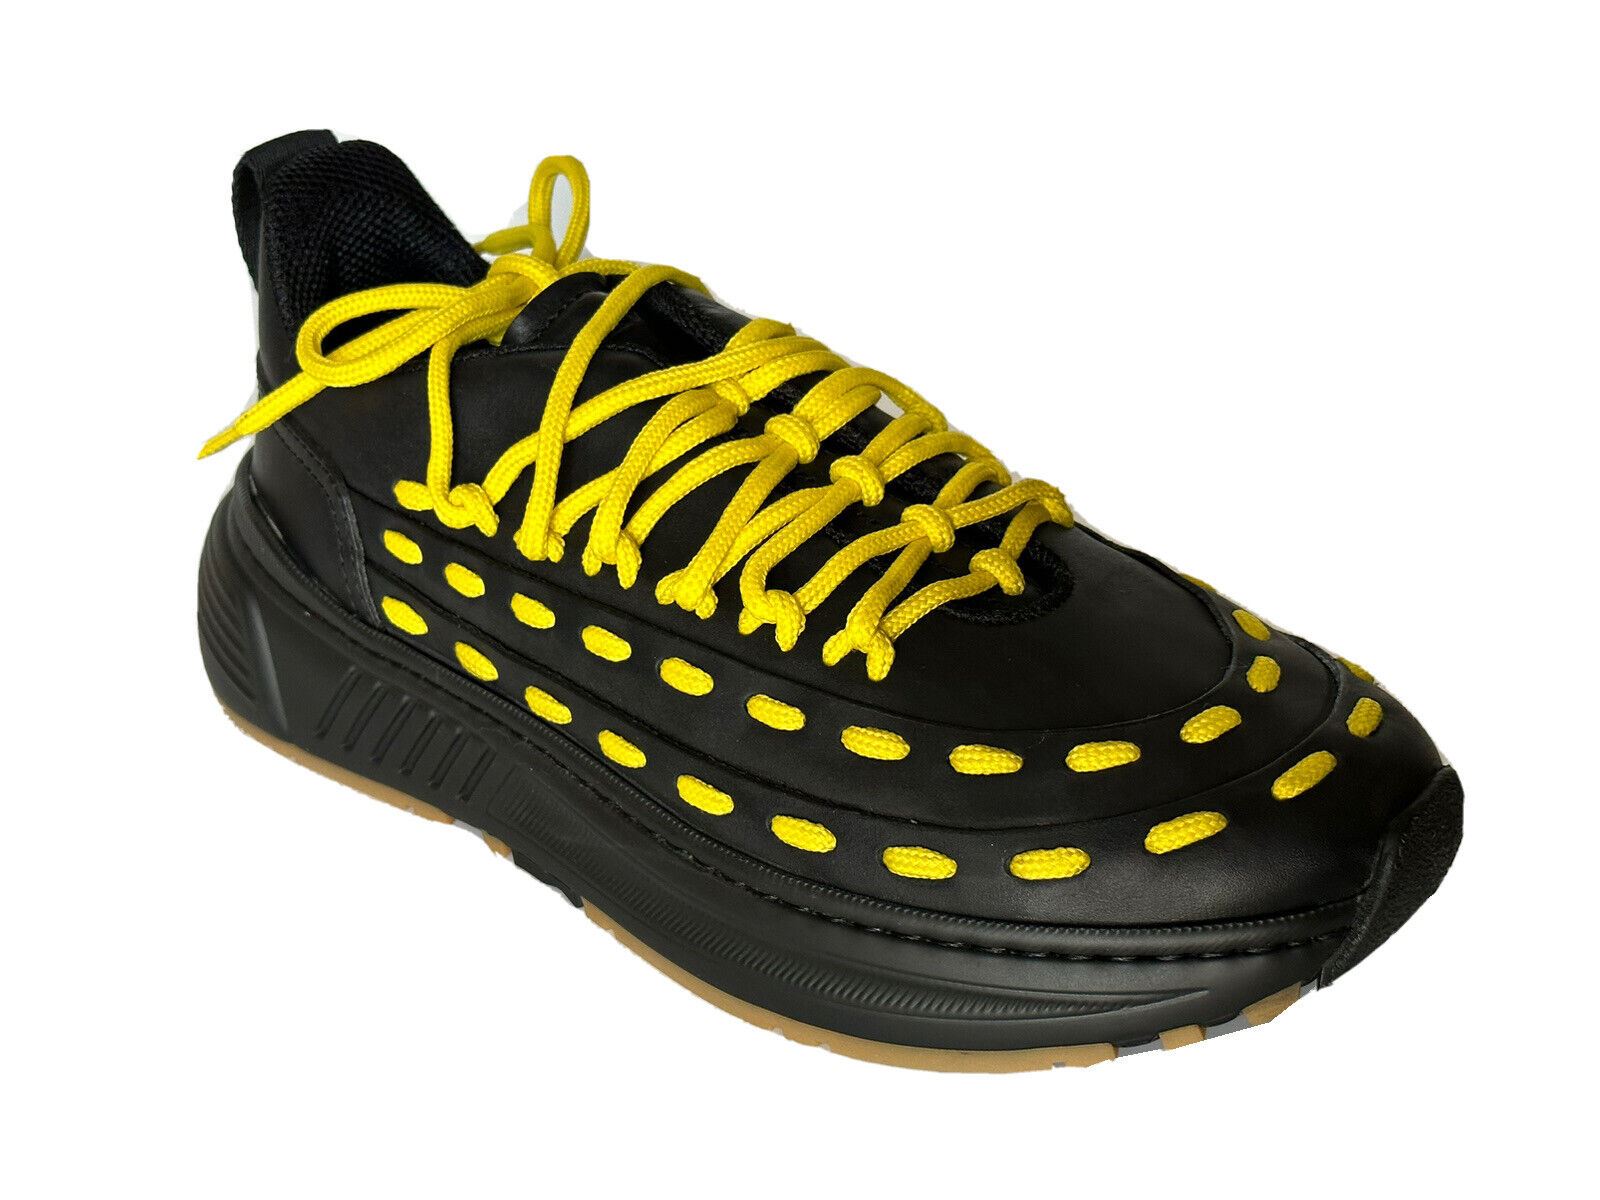 NIB $950 Bottega Veneta Mens Leather Black/Yellow Sneakers 8 US (41) 578305 1013